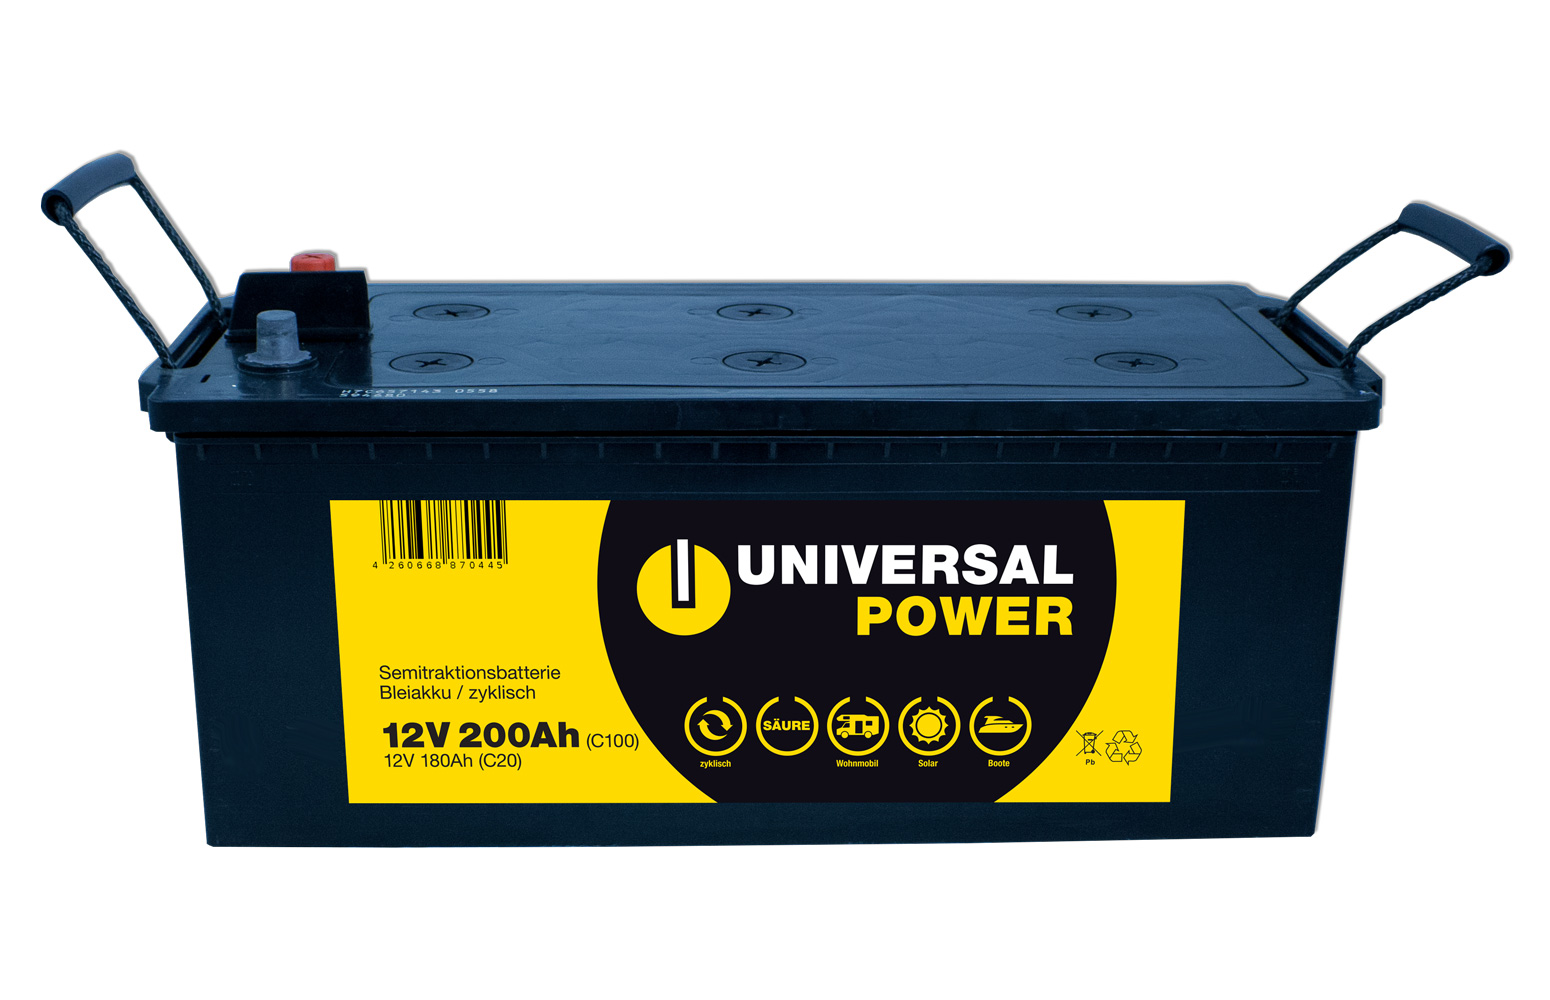 Universal Power Semitraktion UPA12-200 12V 200Ah (C100) Solar